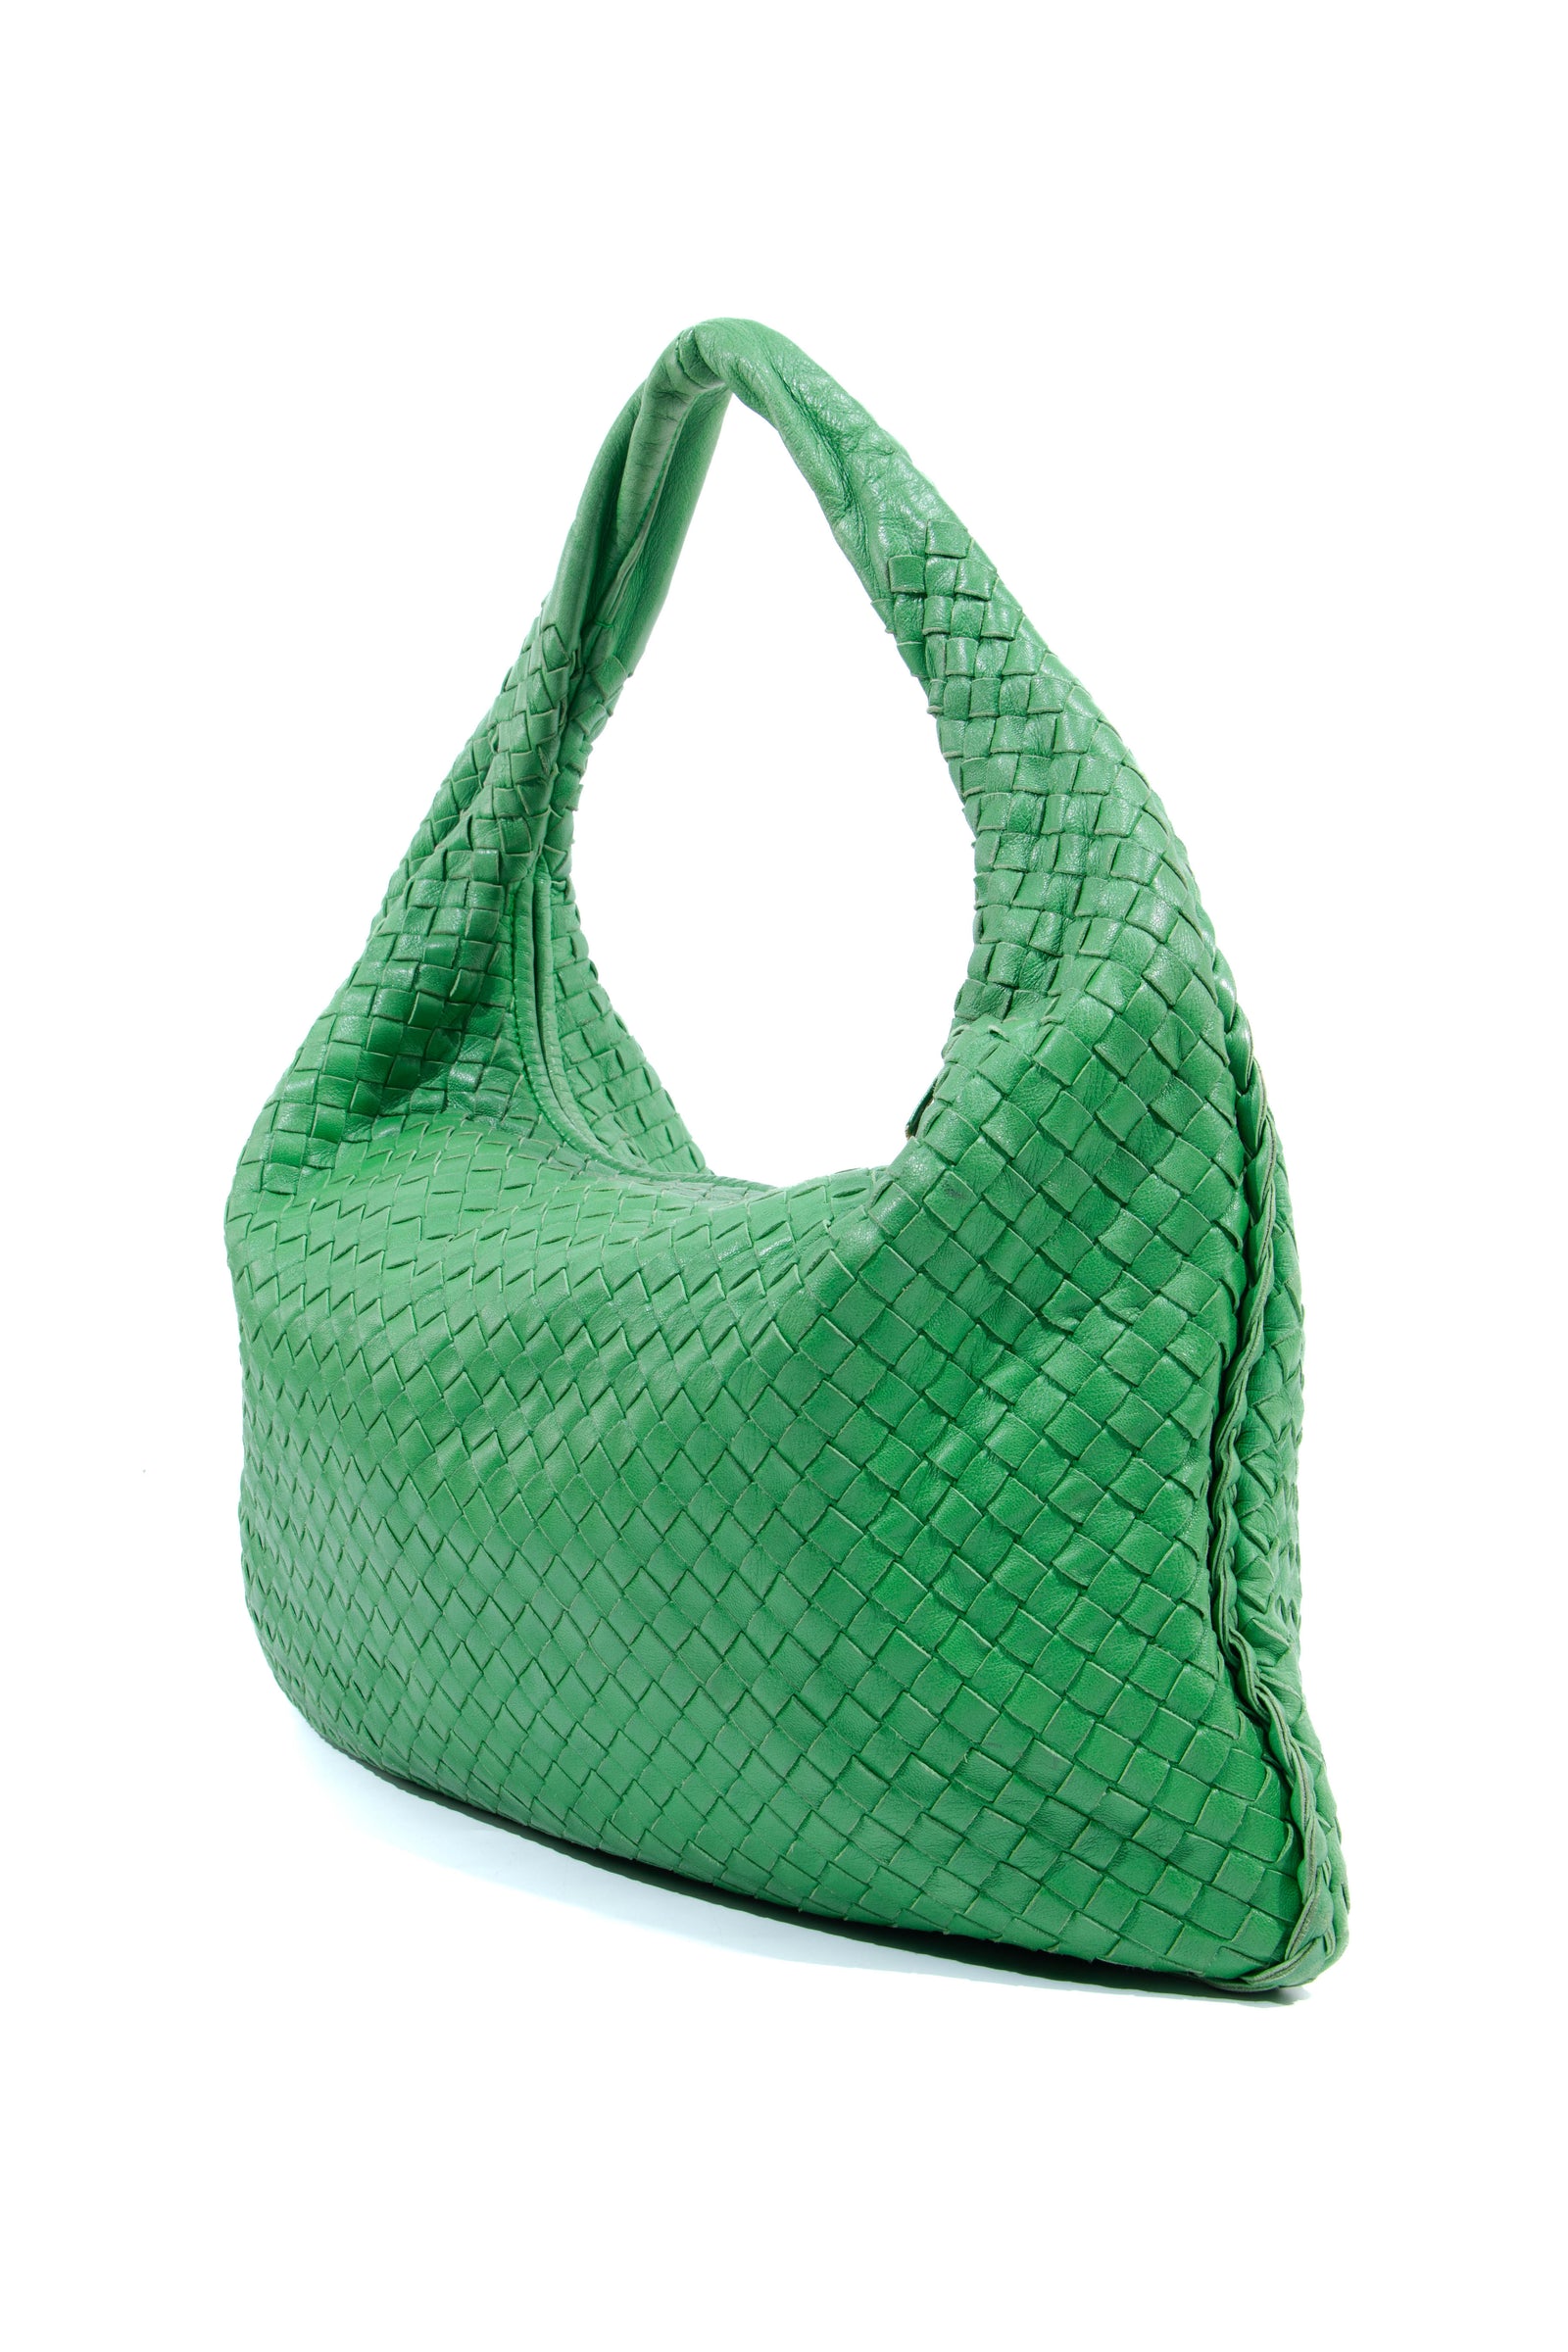 Vintage Louis Vuitton Green Epi Tote Bag in V Shaped Triangle. -  Israel